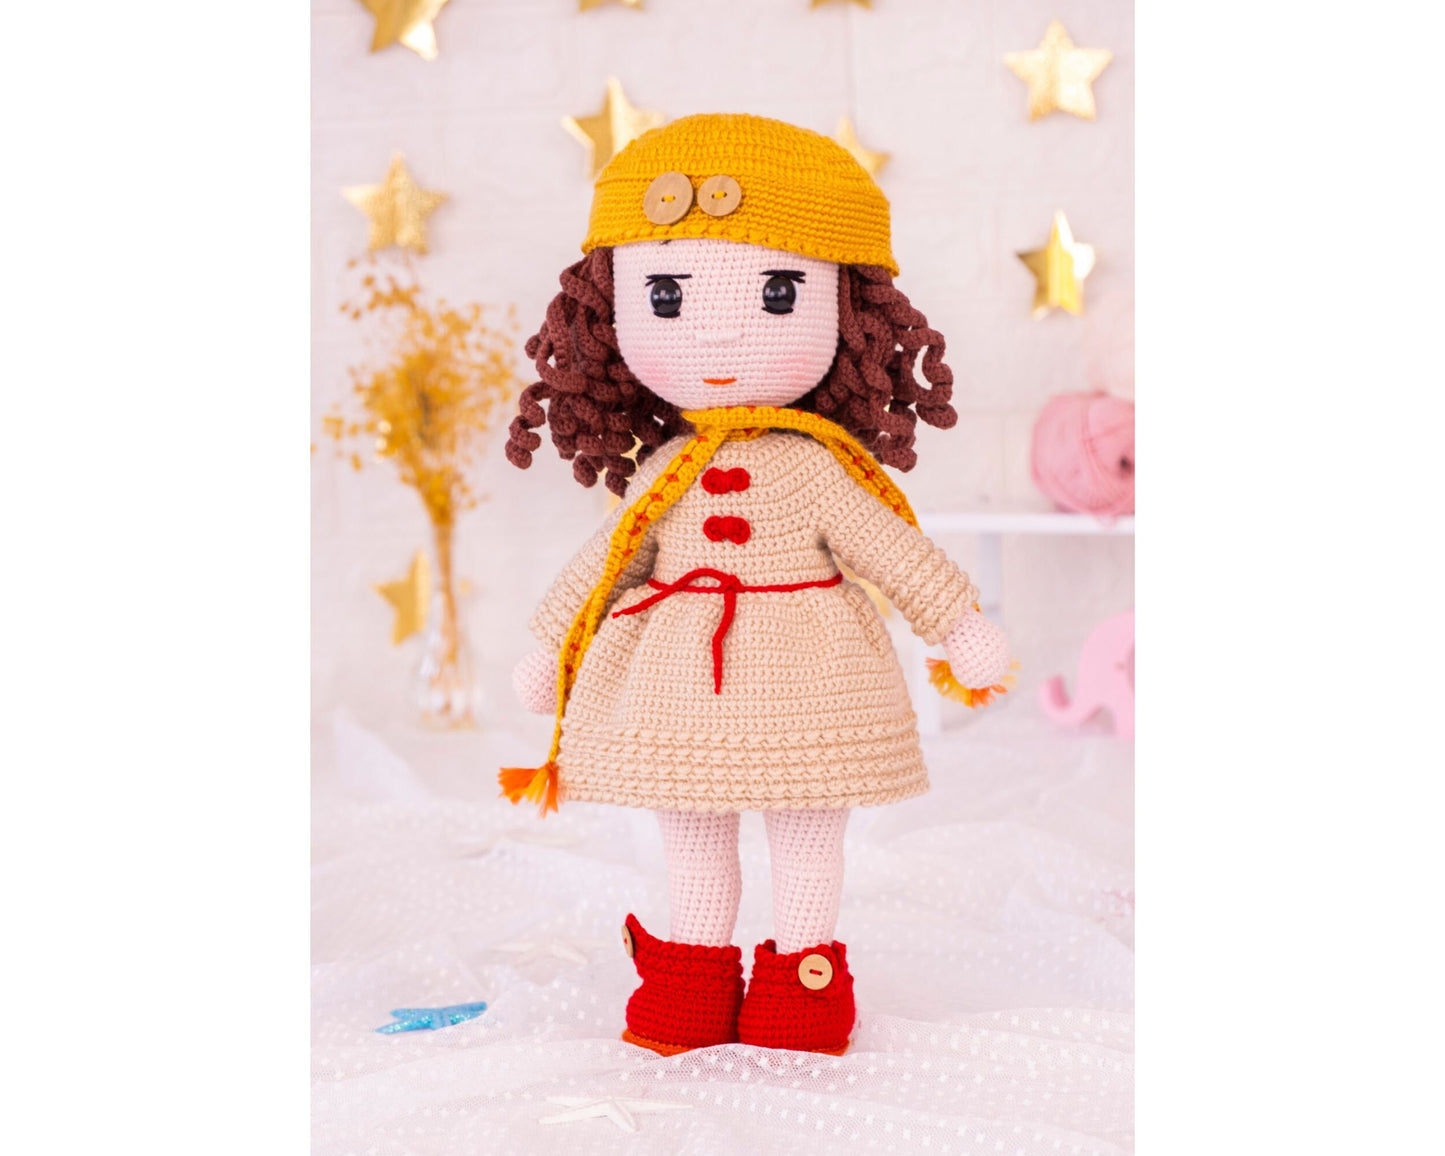 Crochet Doll, Curly Hair Doll, Amigurumi Doll, Granddaughter Gift, Daughter Gift, Christmas Doll, Knitted Dolls, Handmade Doll, Soft Doll